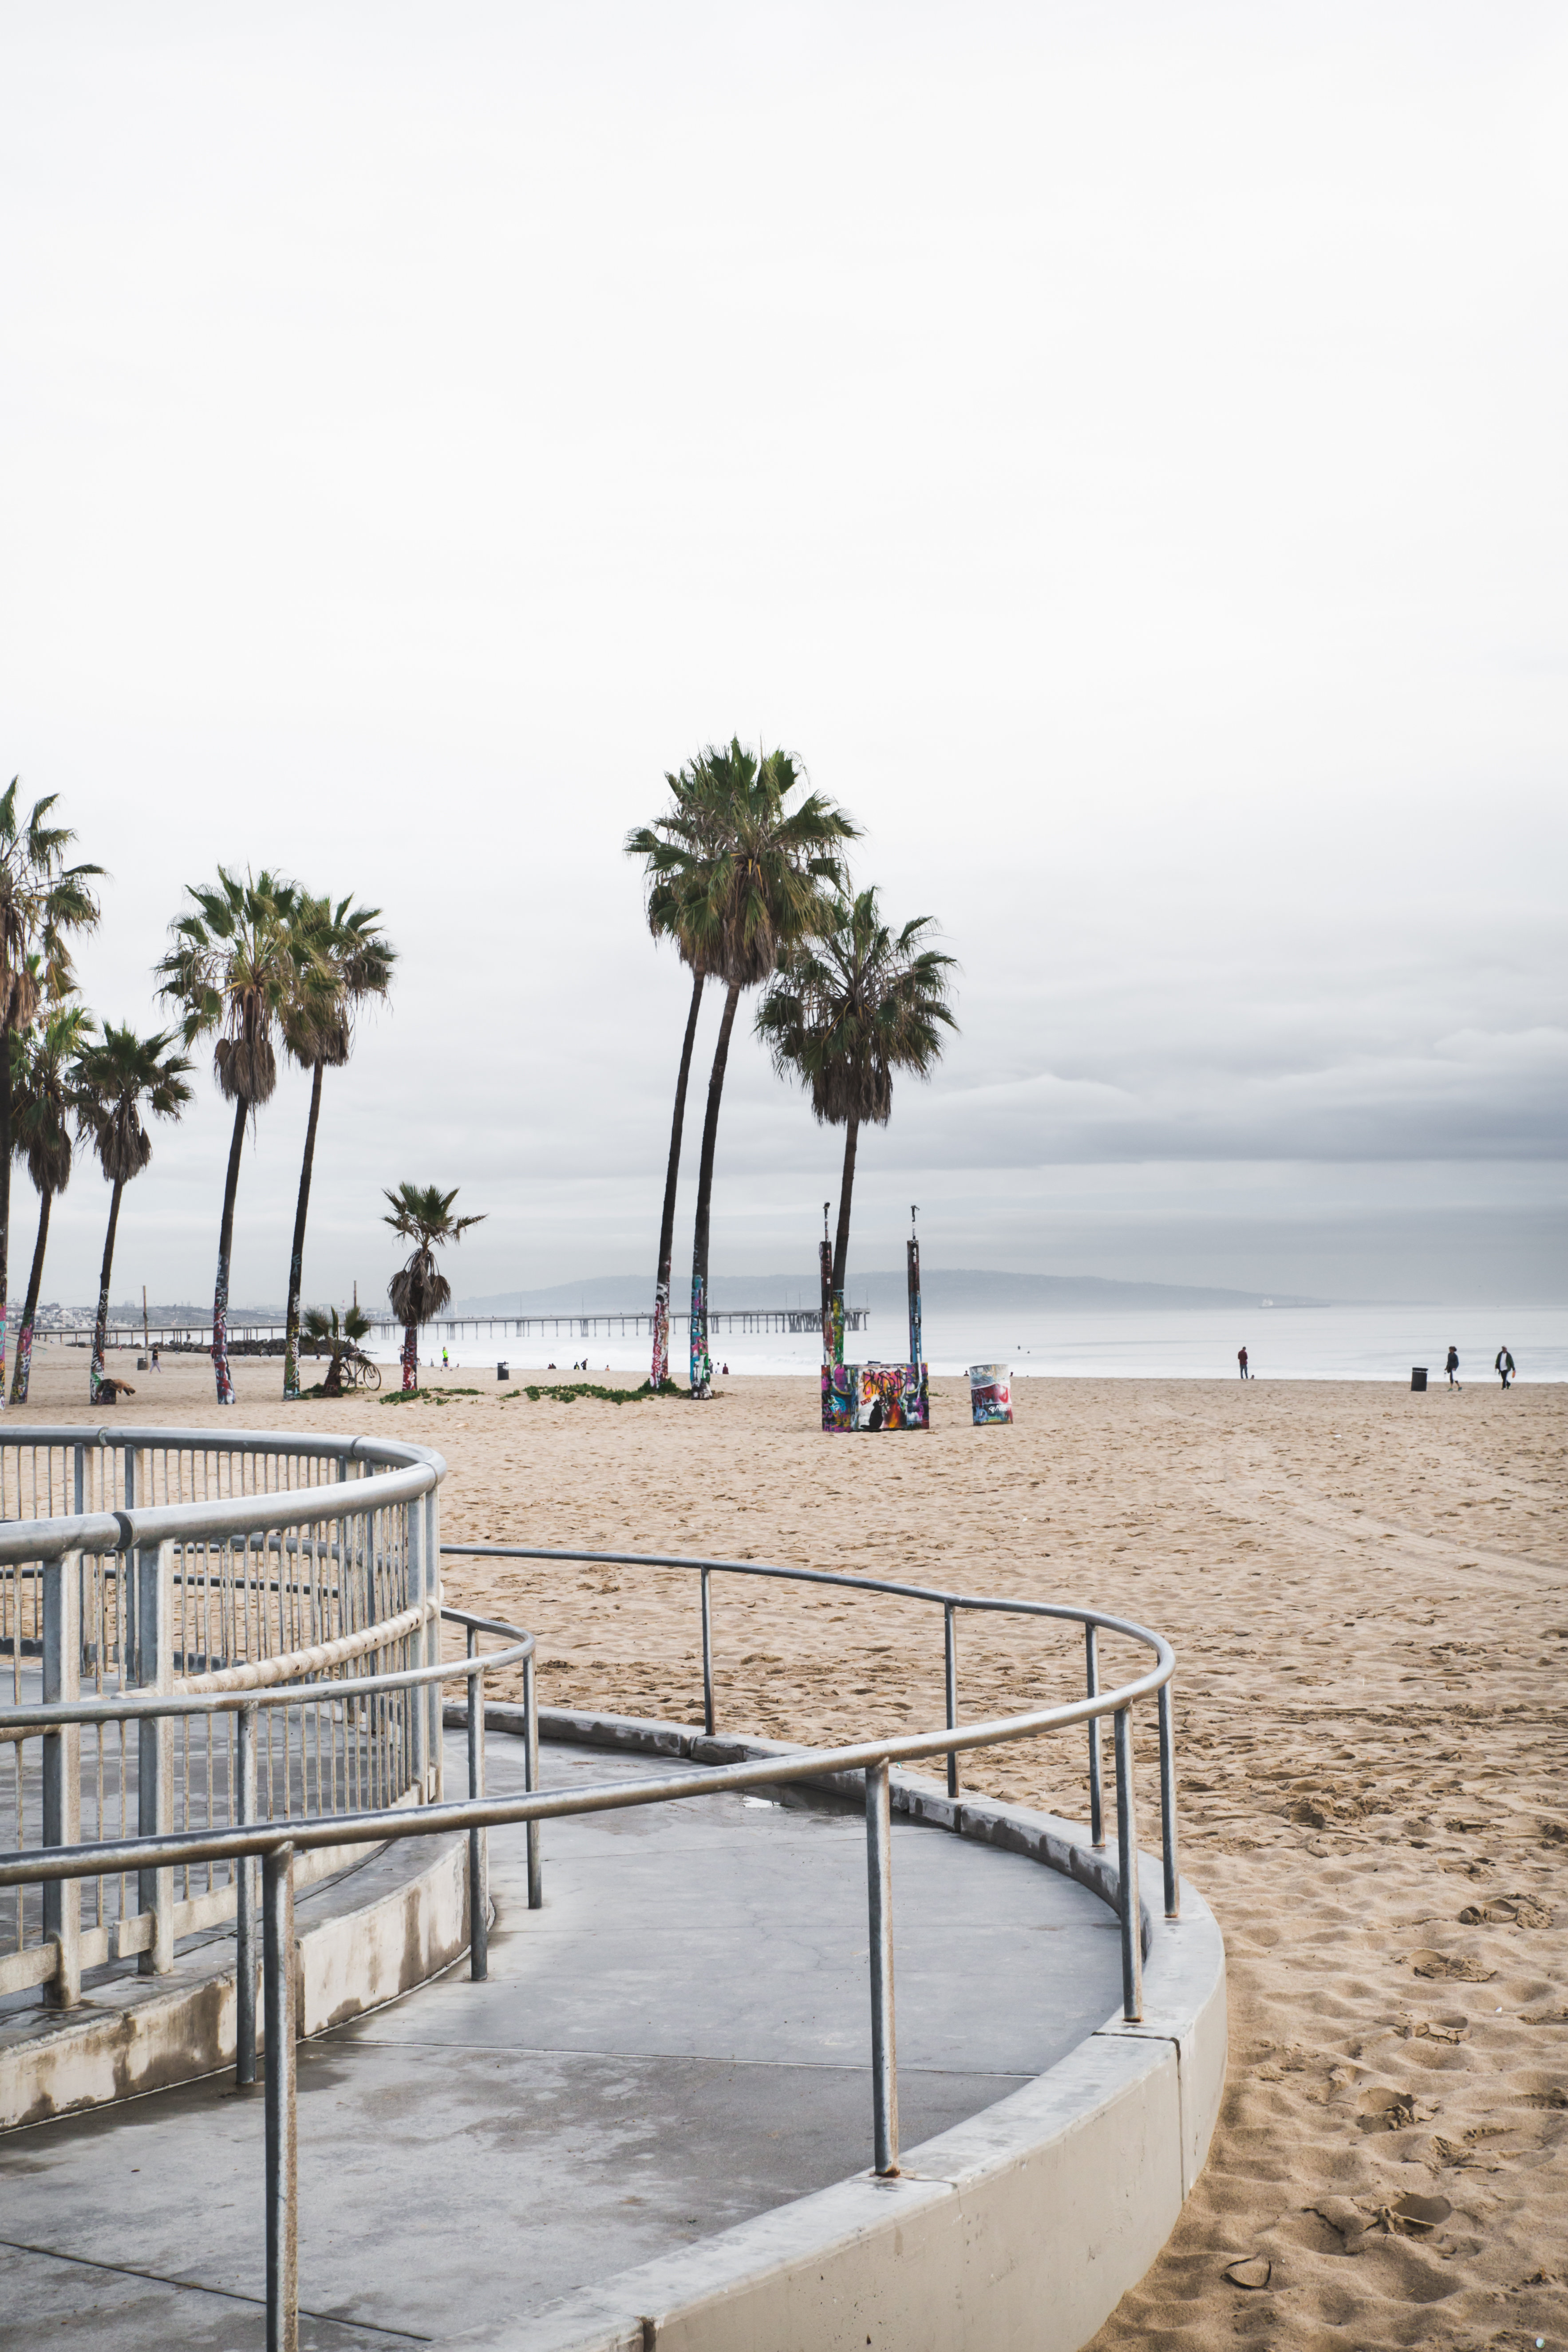 Mégane Arderighi - Venice Beach Los Angeles 